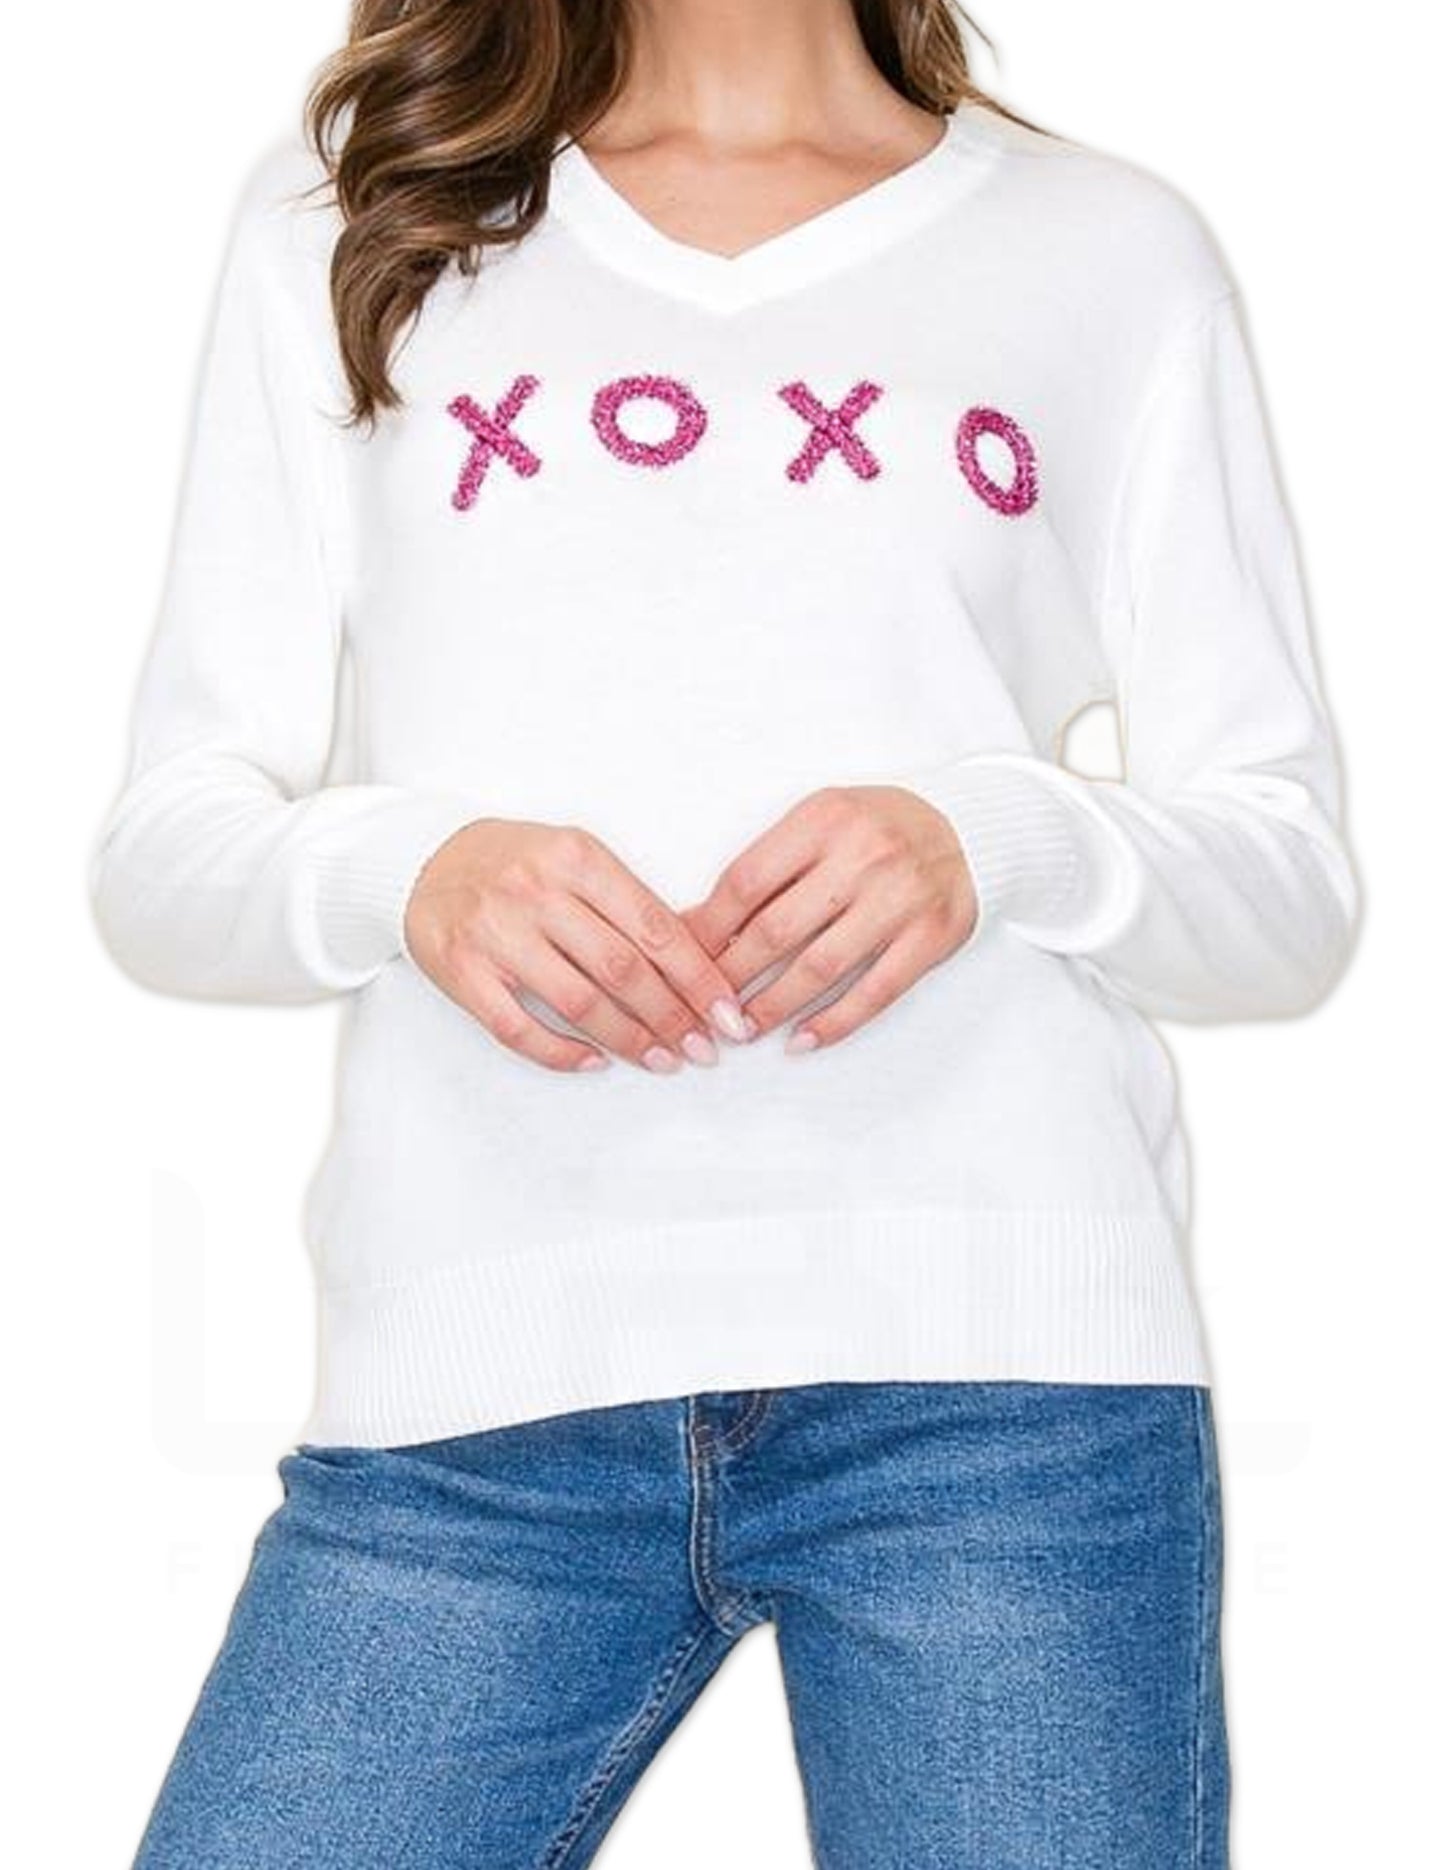 Xoxo Sweater